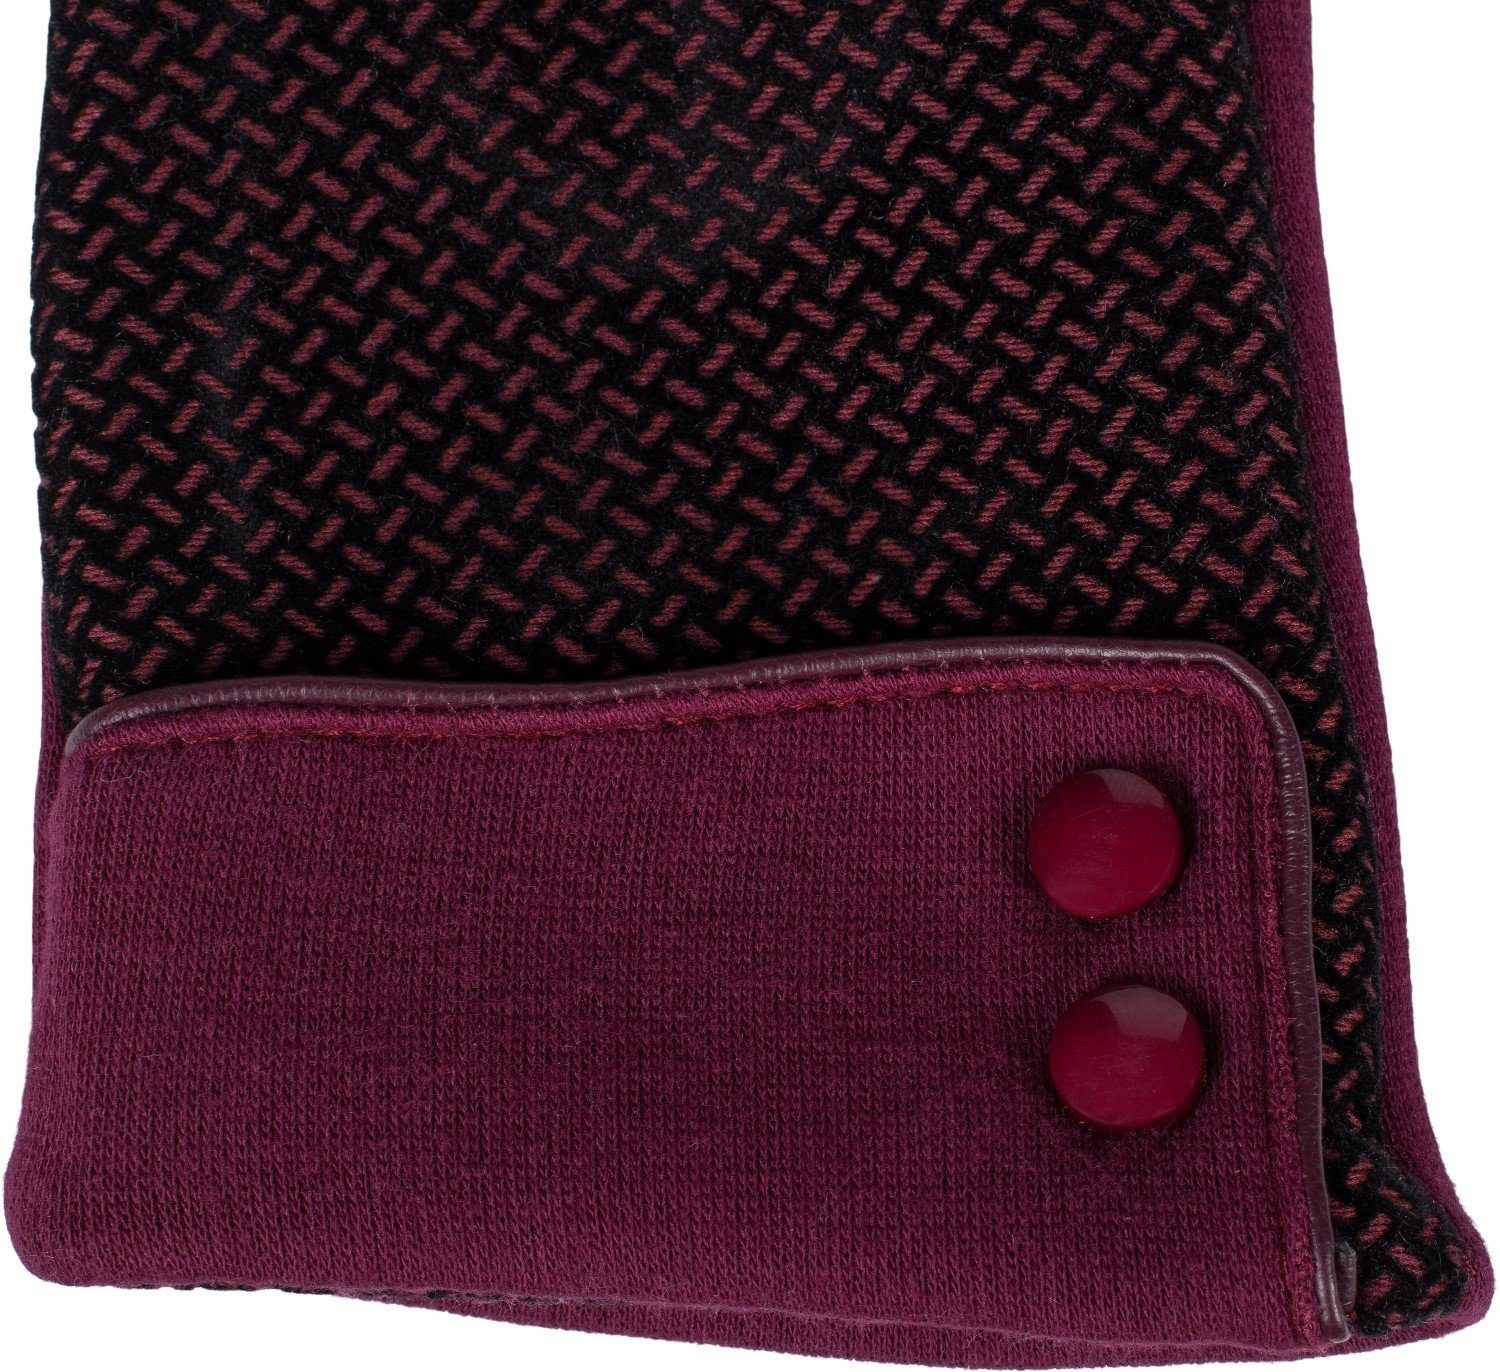 weichem Handschuhe styleBREAKER Riffel Touchscreen mit Bordeaux-Rot Muster Baumwollhandschuhe